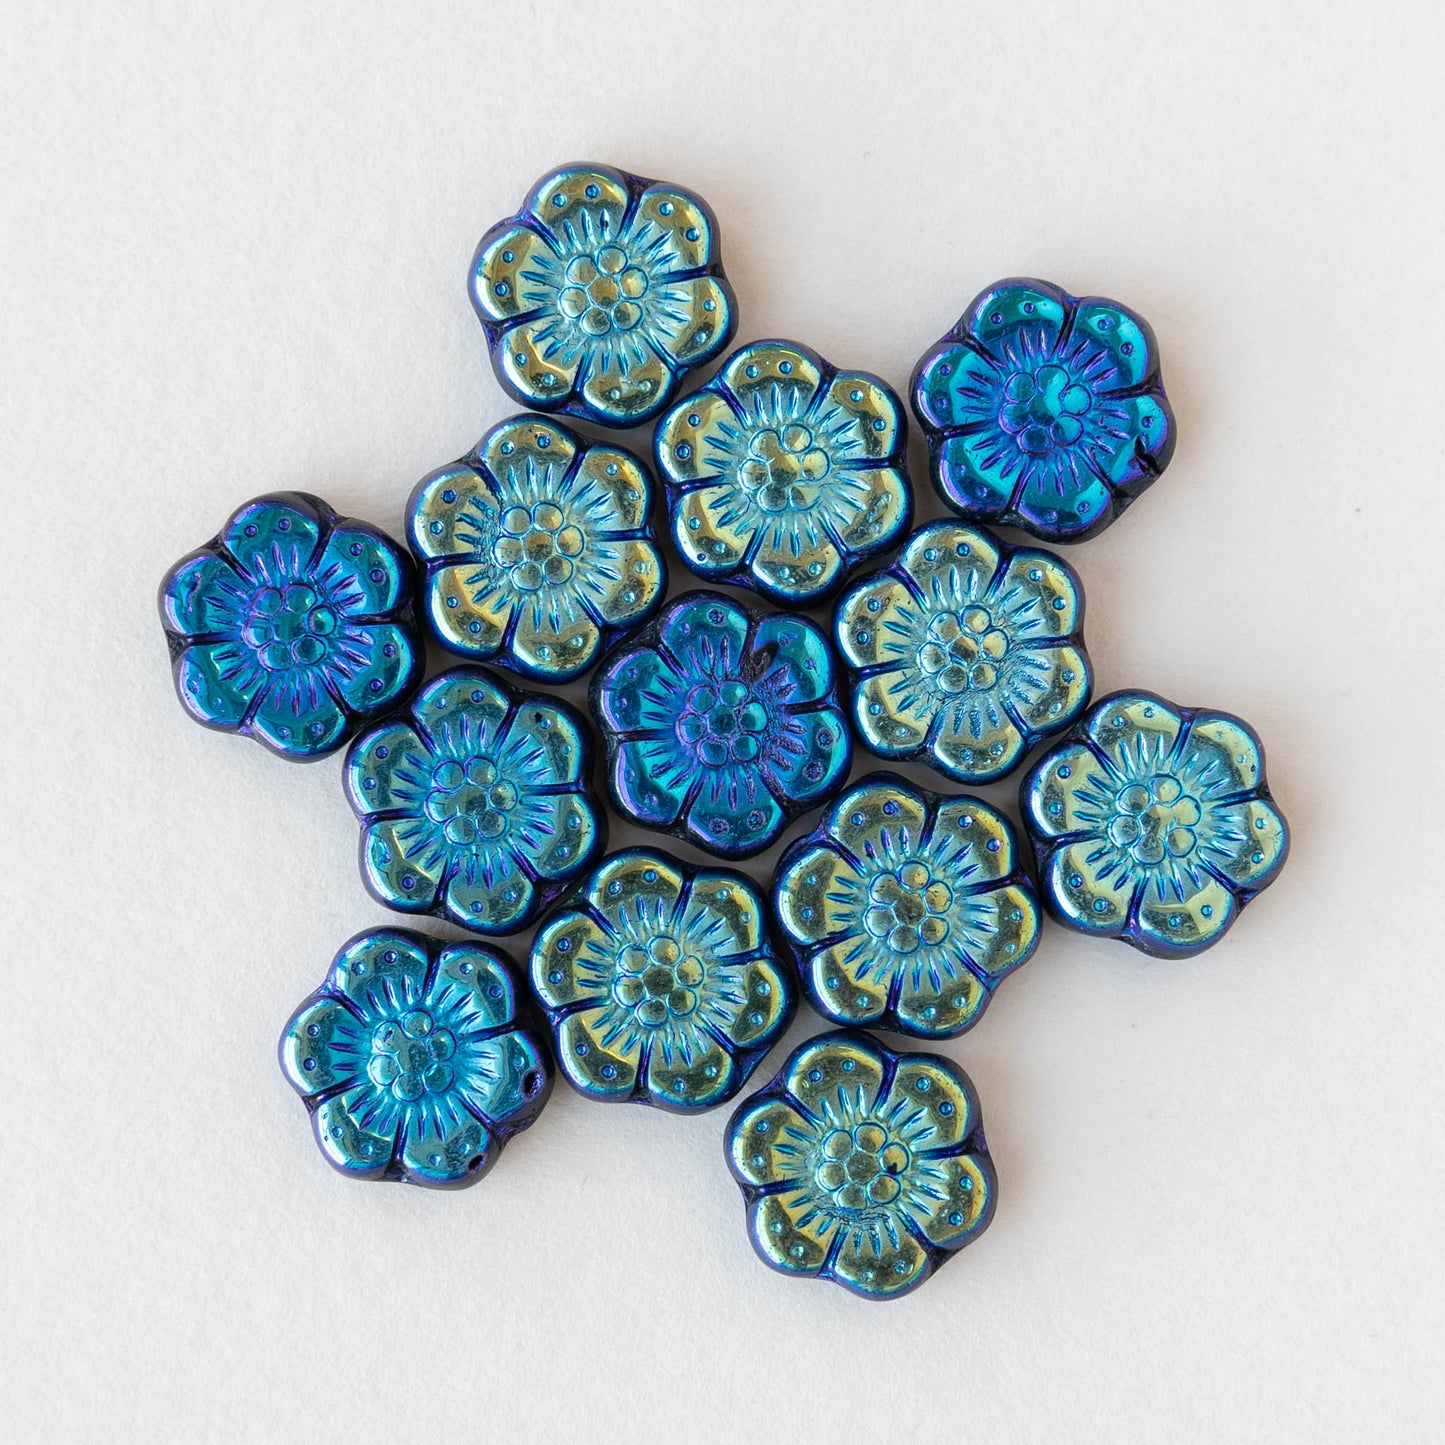 14mm Anemone Flower Beads - Metallic Blue Iris - 10 Beads